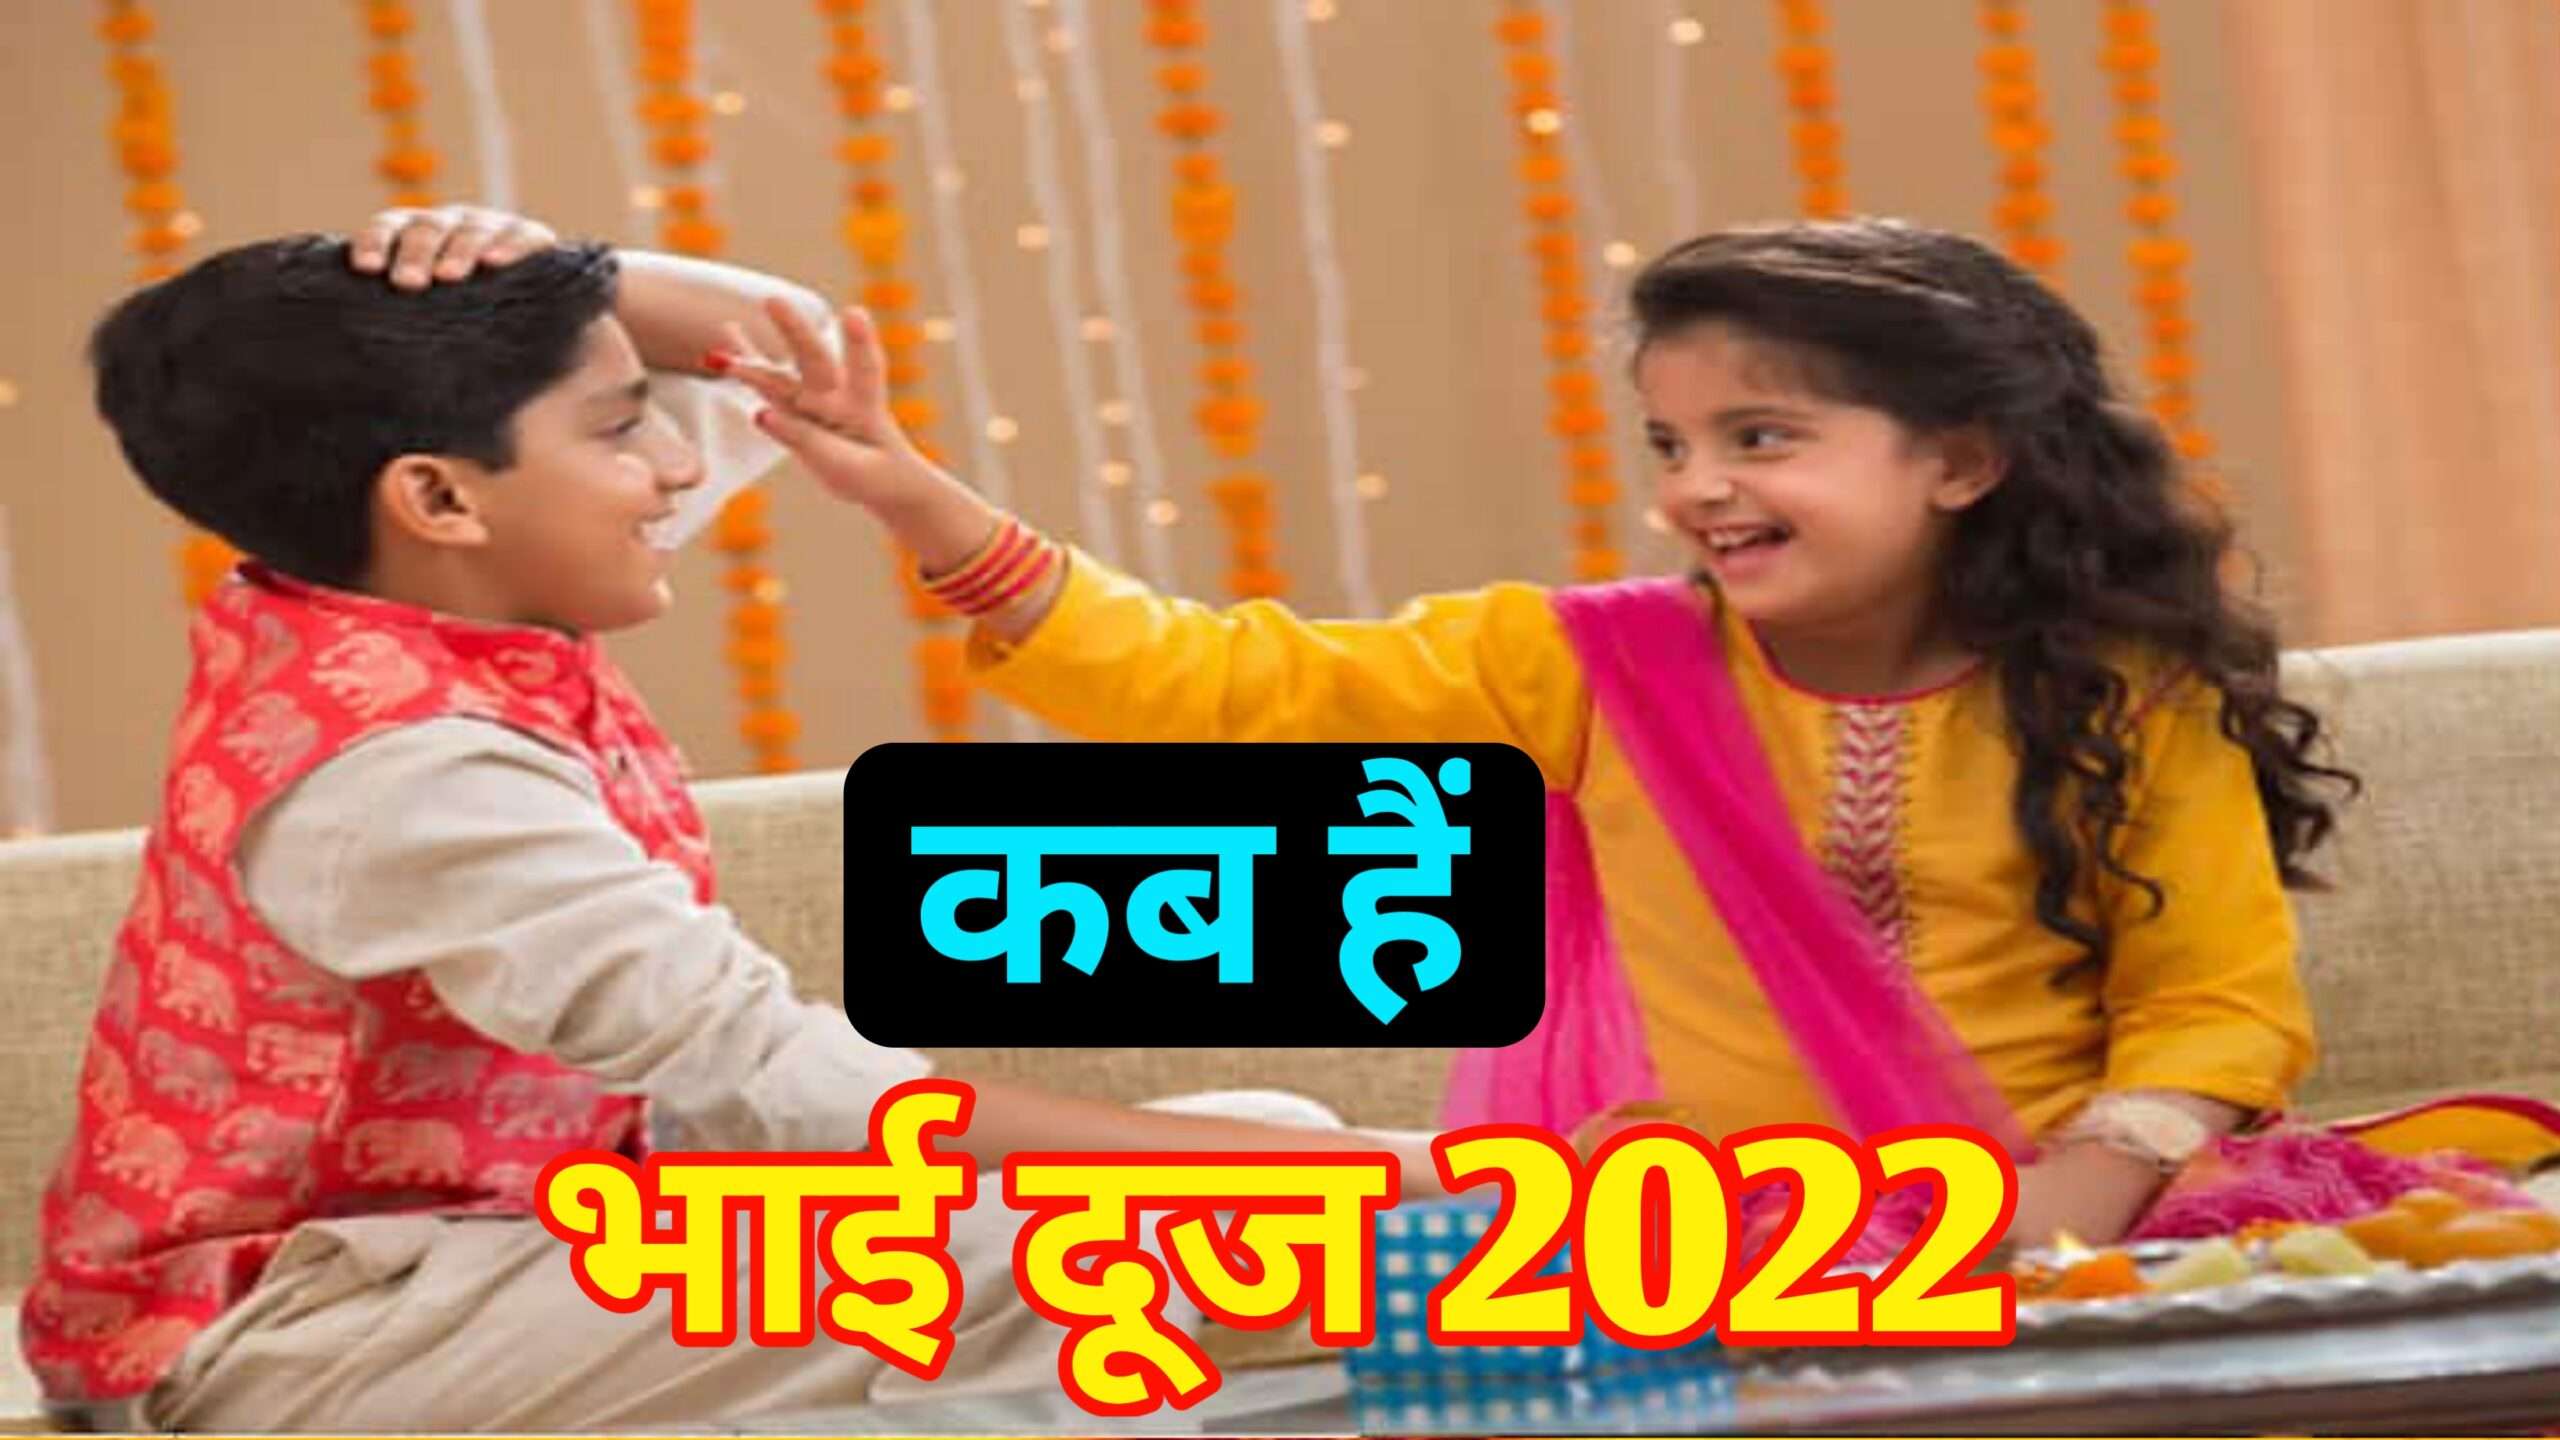 Bhai Dooj 2022 Date And Time